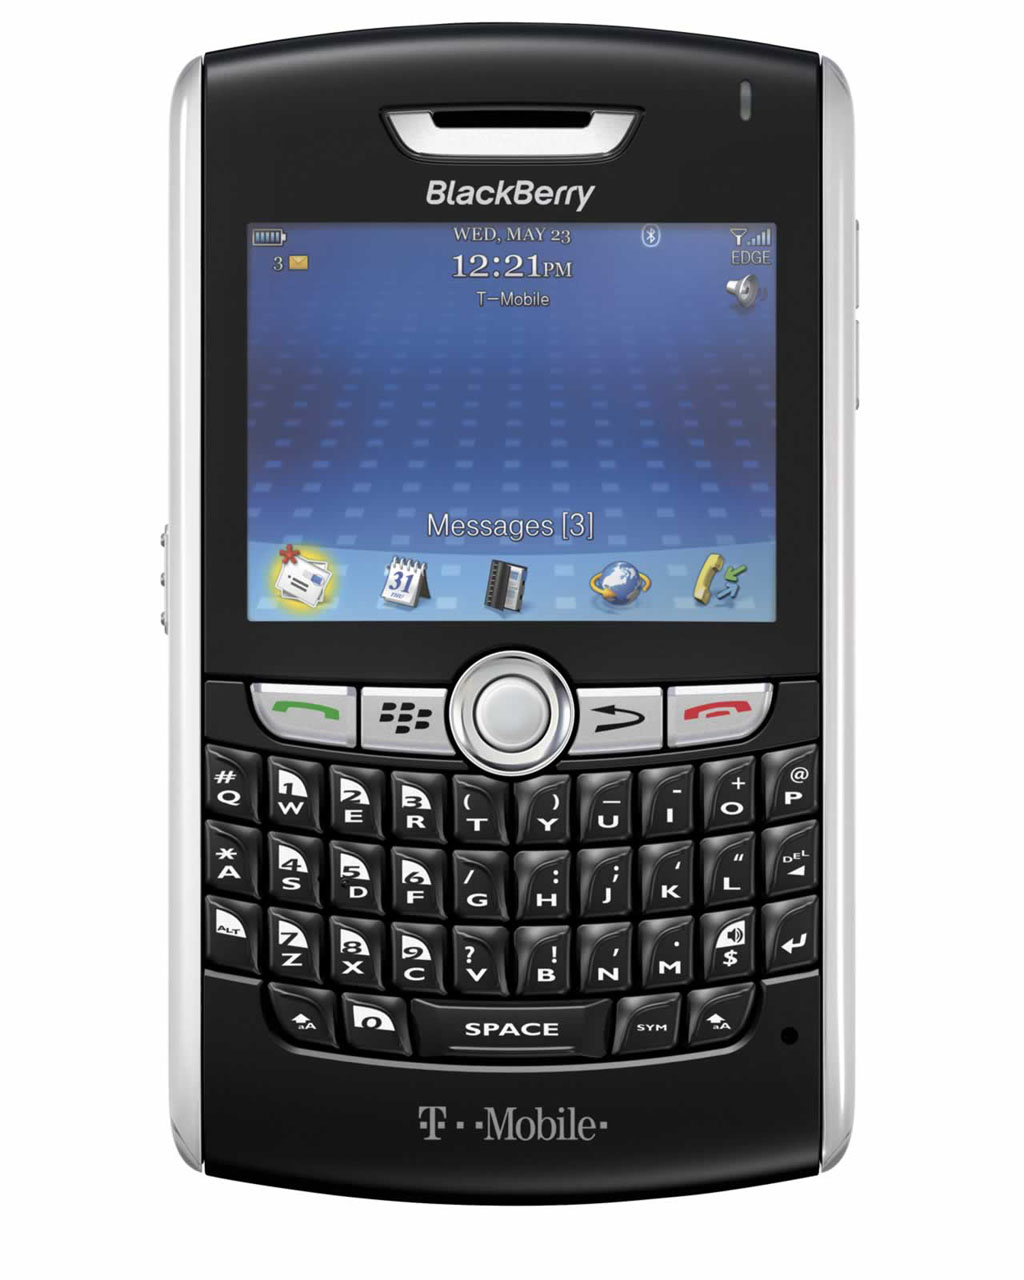 NO.5Mercury黑莓手机 
最初听到黑莓是因为美国总统都在用，可以说质量、性能、安全都有保障。现在黑莓与TCL达成授权协议，所以，今年在CES上推出了Mercury黑莓新机，也让我们感受到了久违的熟悉感。
